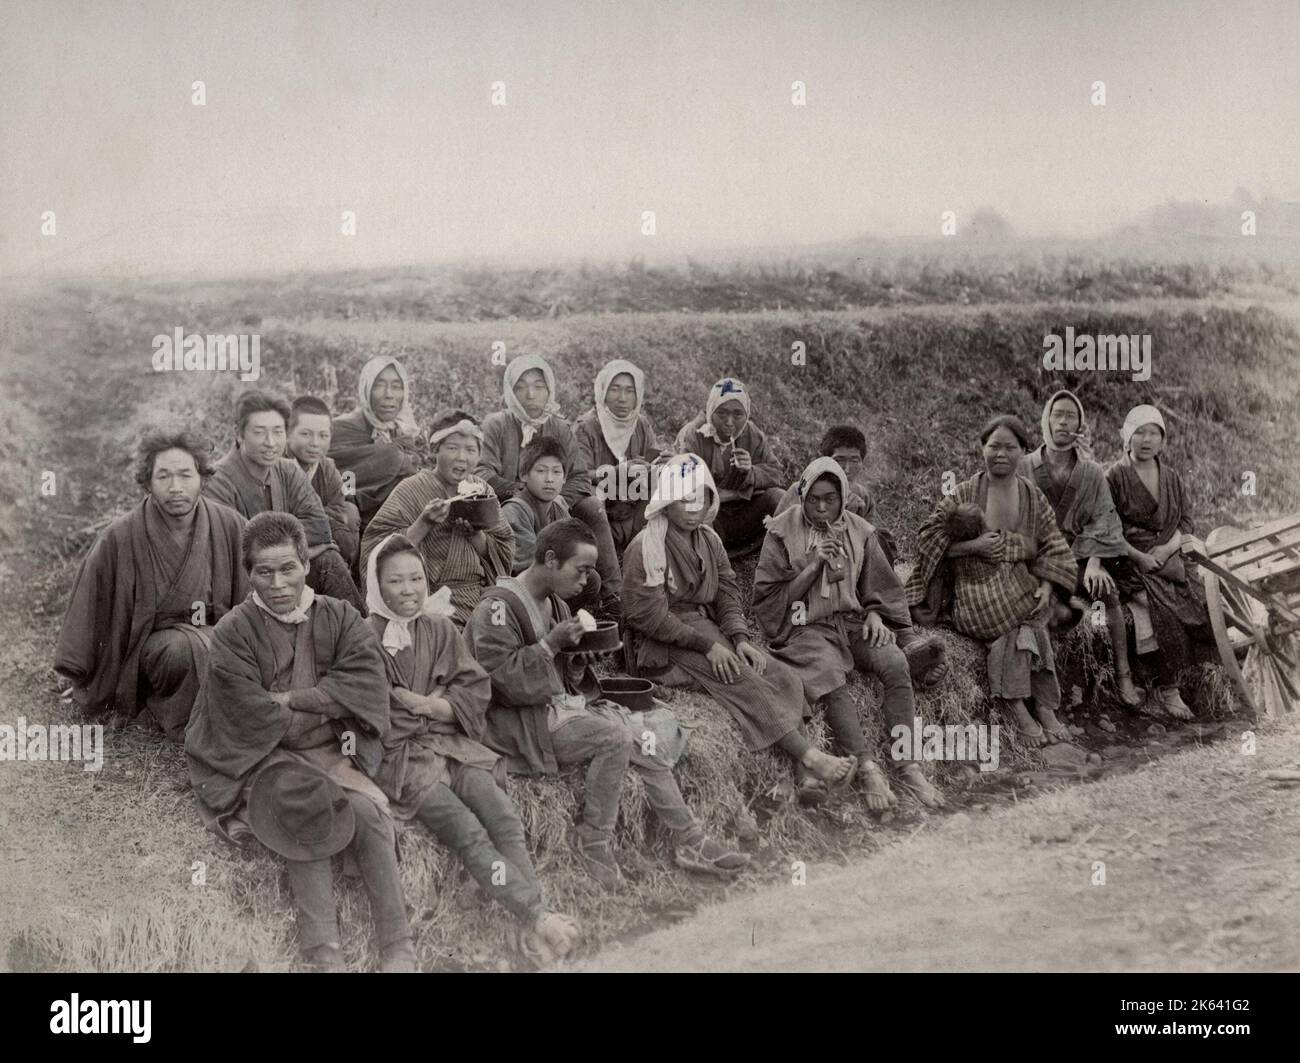 Gruppe von Landleuten, Landarbeitern. Vintage 19. Jahrhundert Foto. Stockfoto